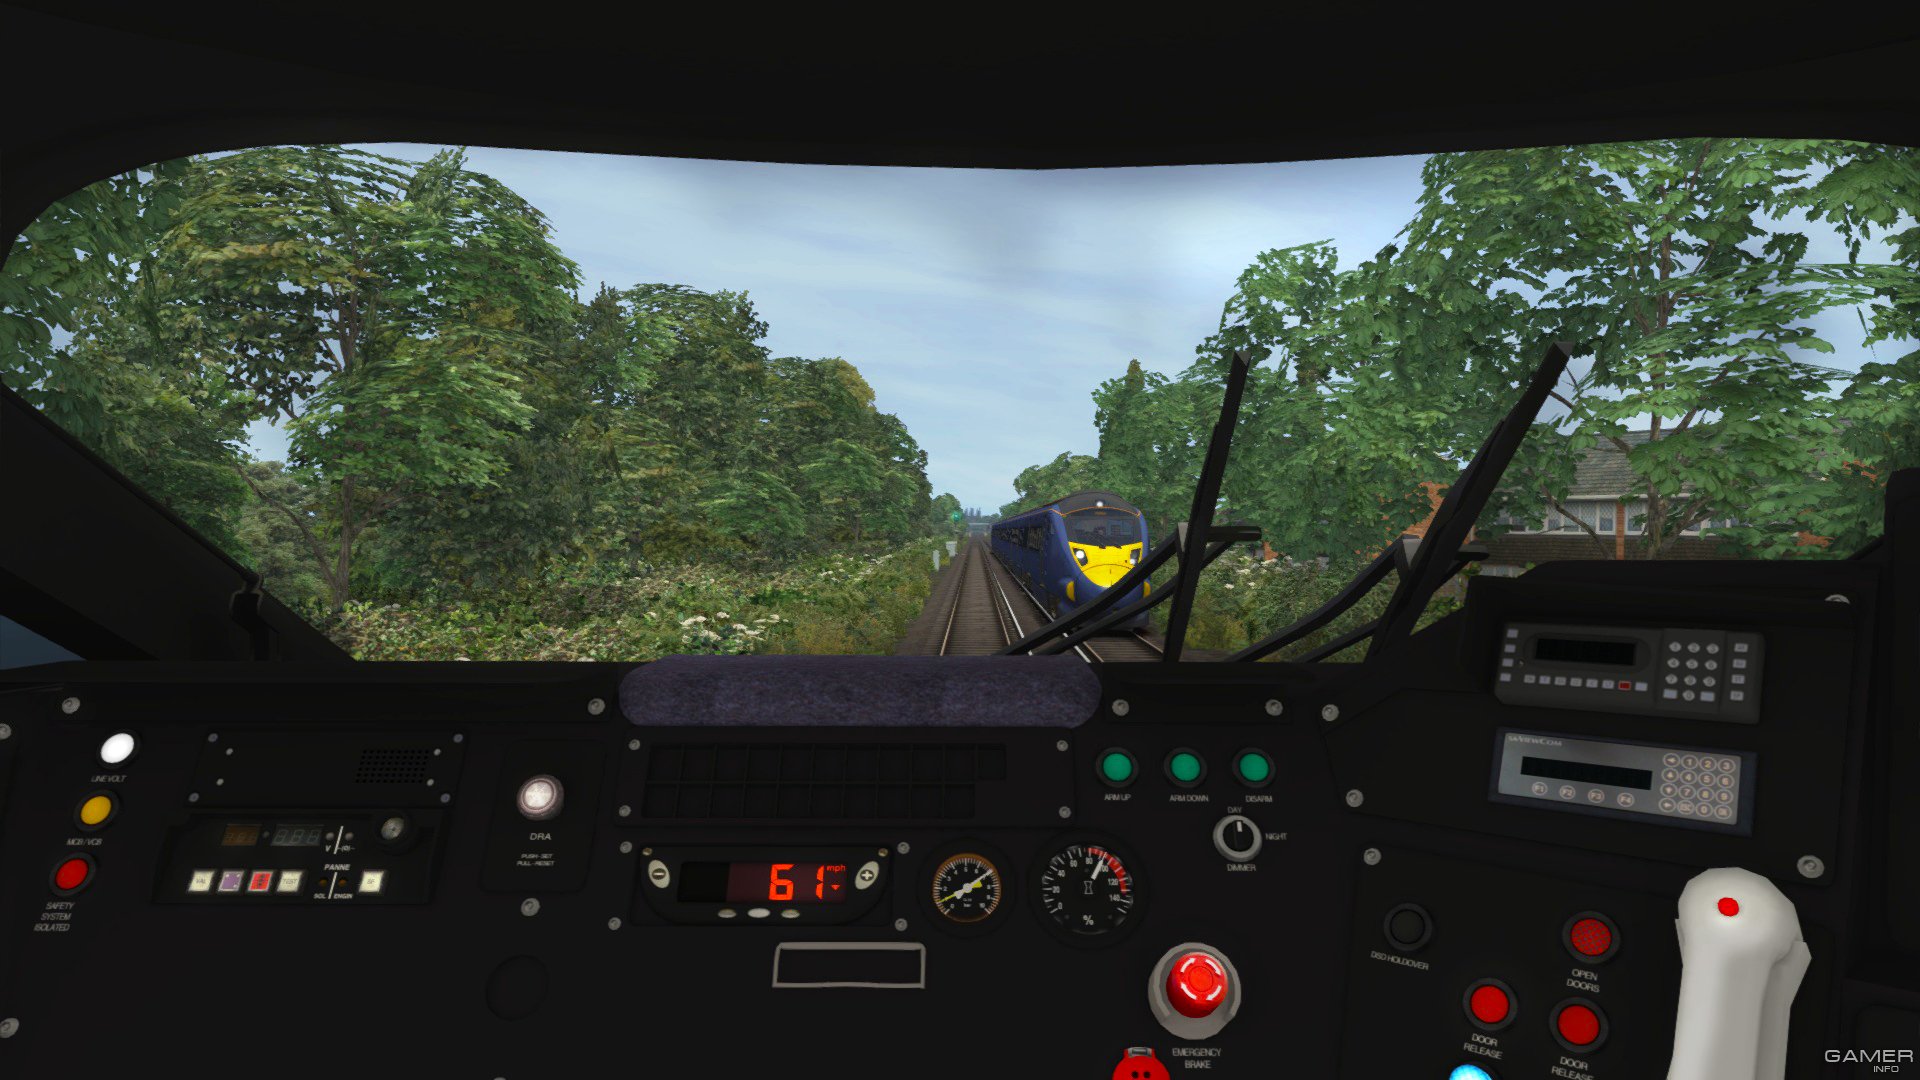 train simulator 2014 free play